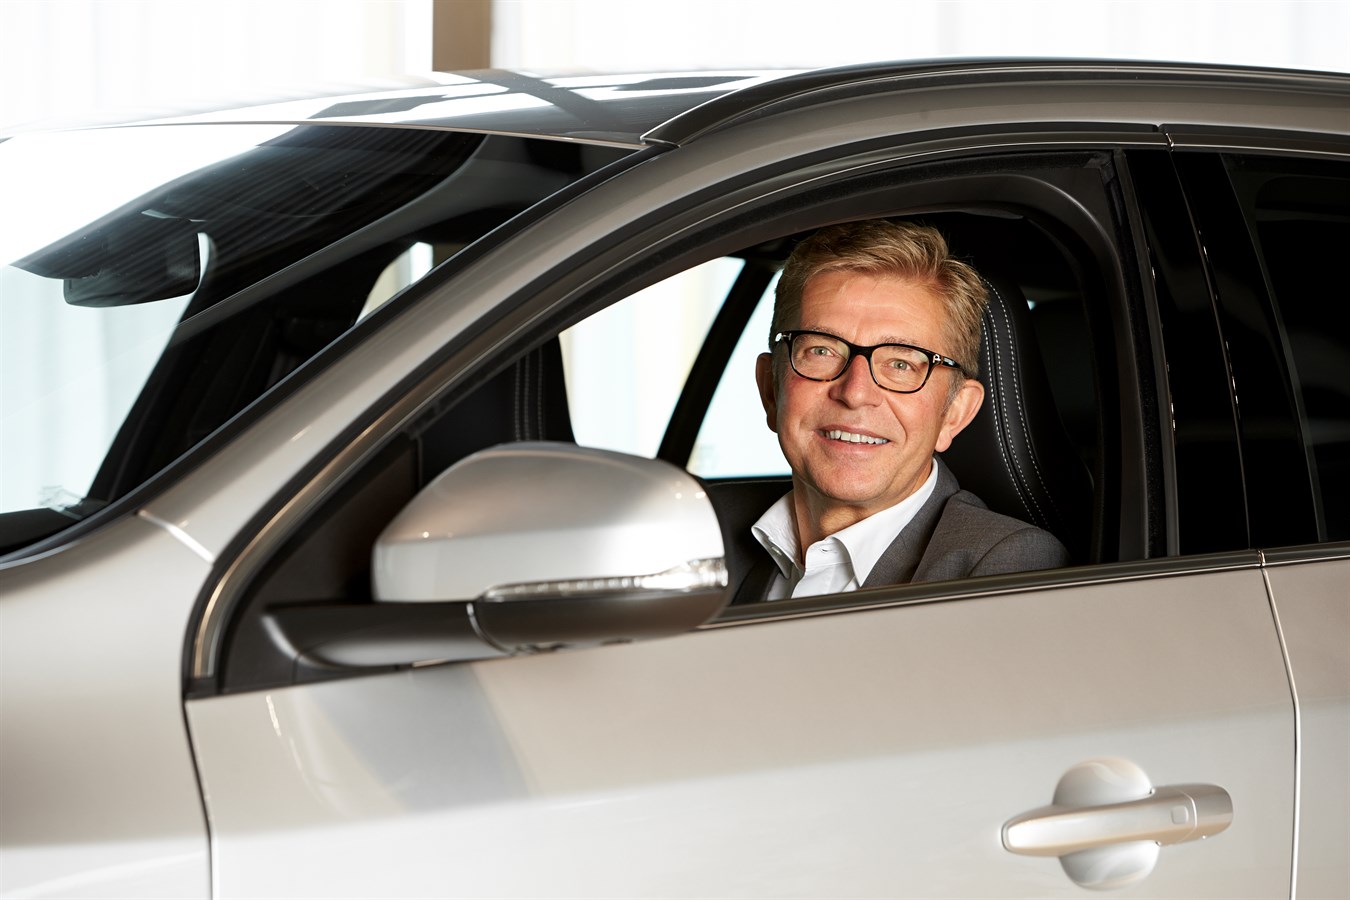 Mikael Ohlsson - Member of the Board of Directors, Volvo Car Corporation